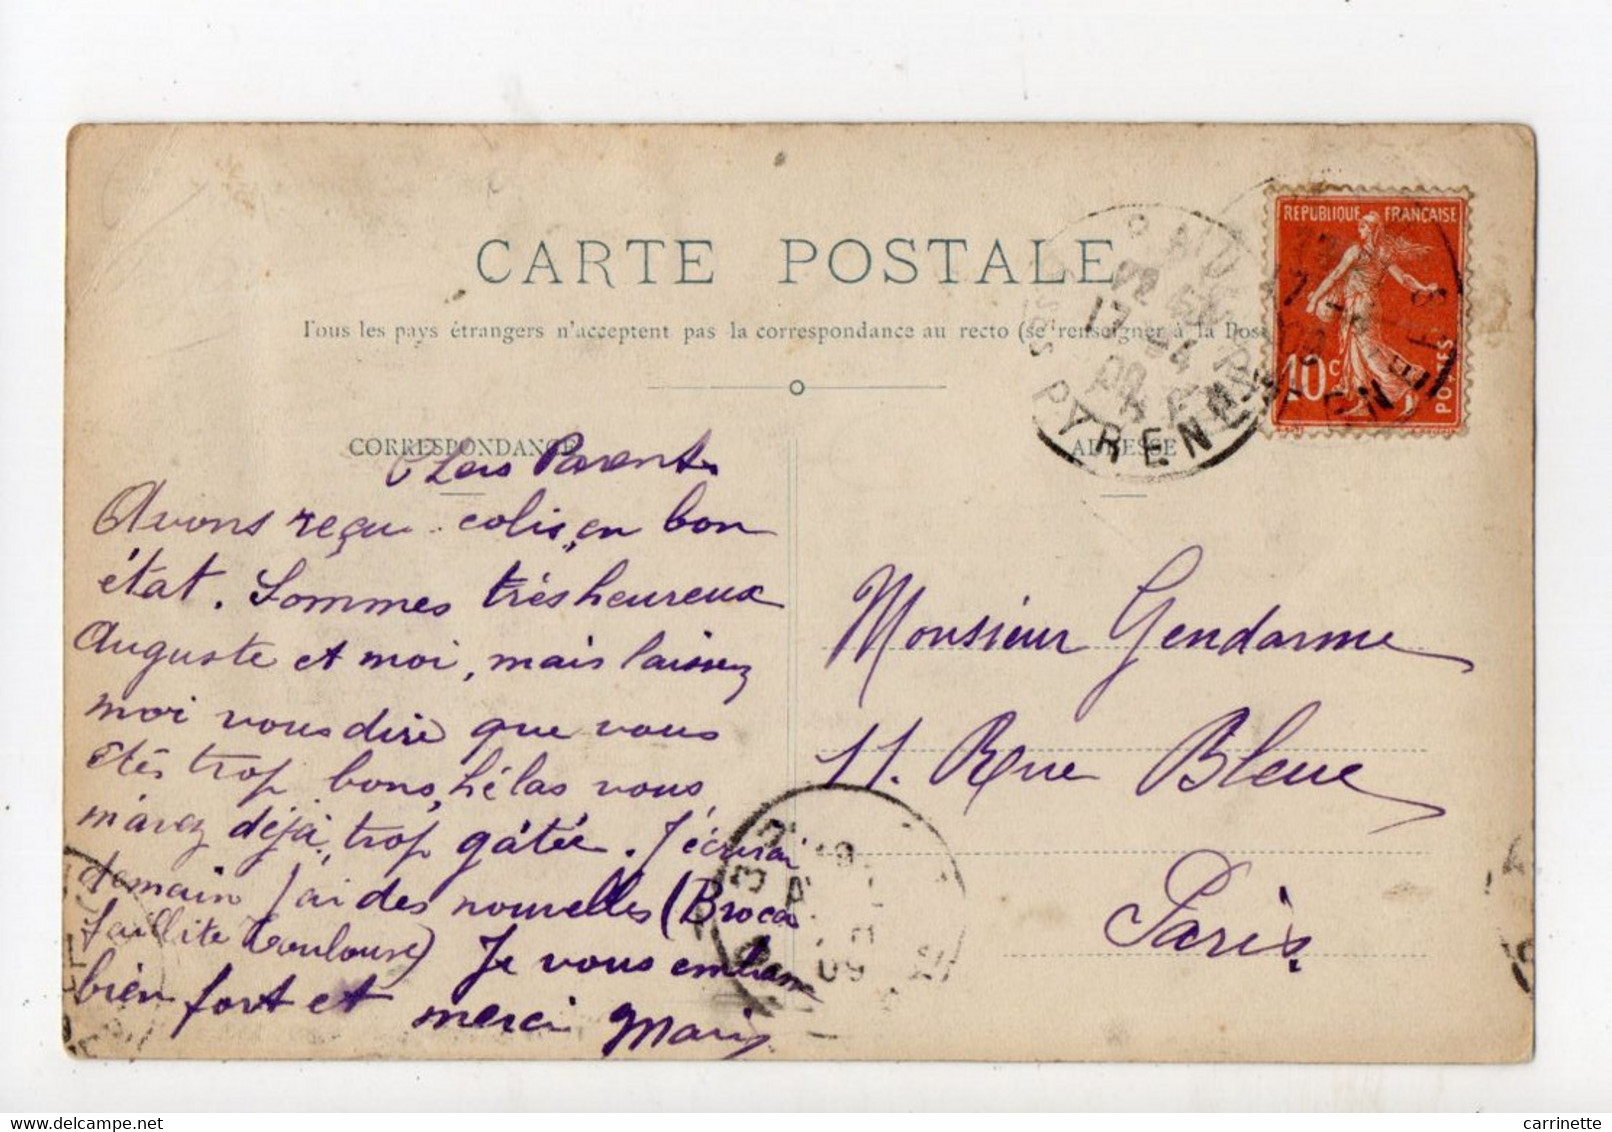 LEMBEYE - 64 - Béarn - Cavalcade Du 29 Mars 1908 - Le Char Des Chasseurs - Achat Immédiat - Lembeye